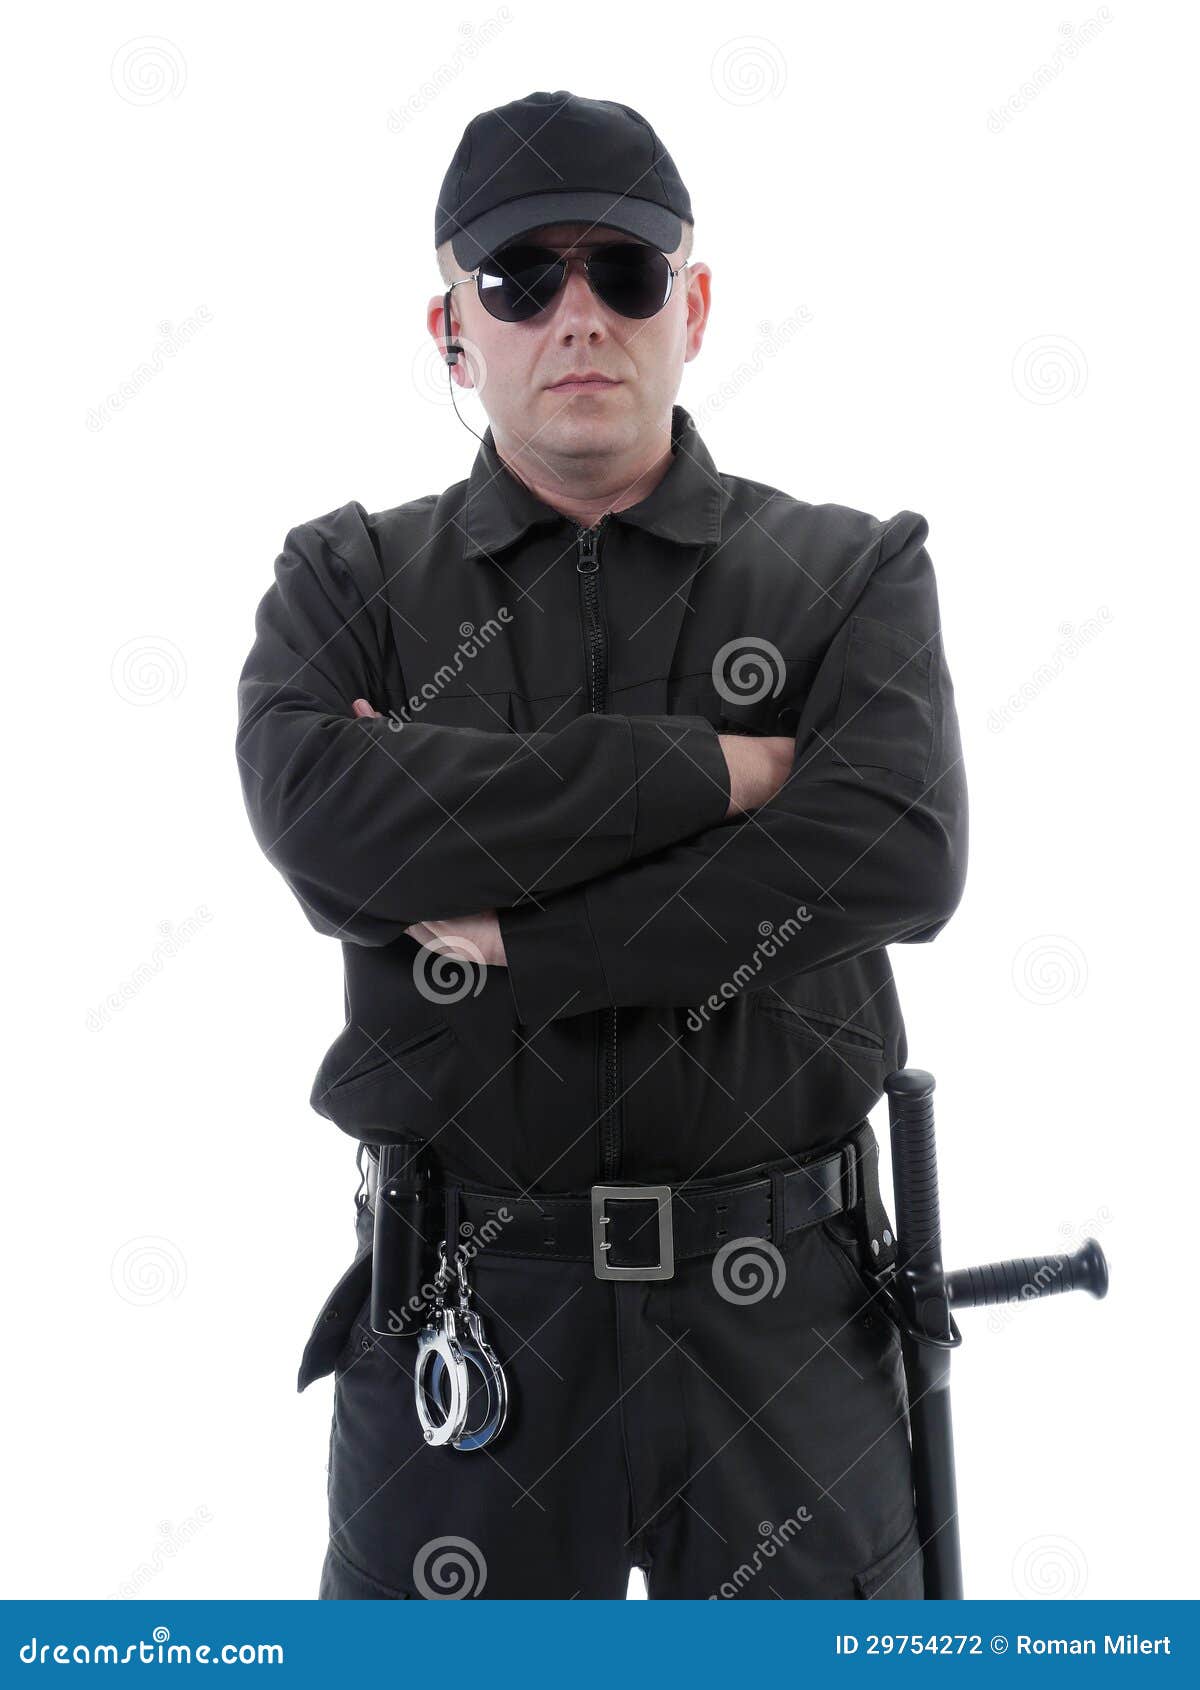 Policeman or securit